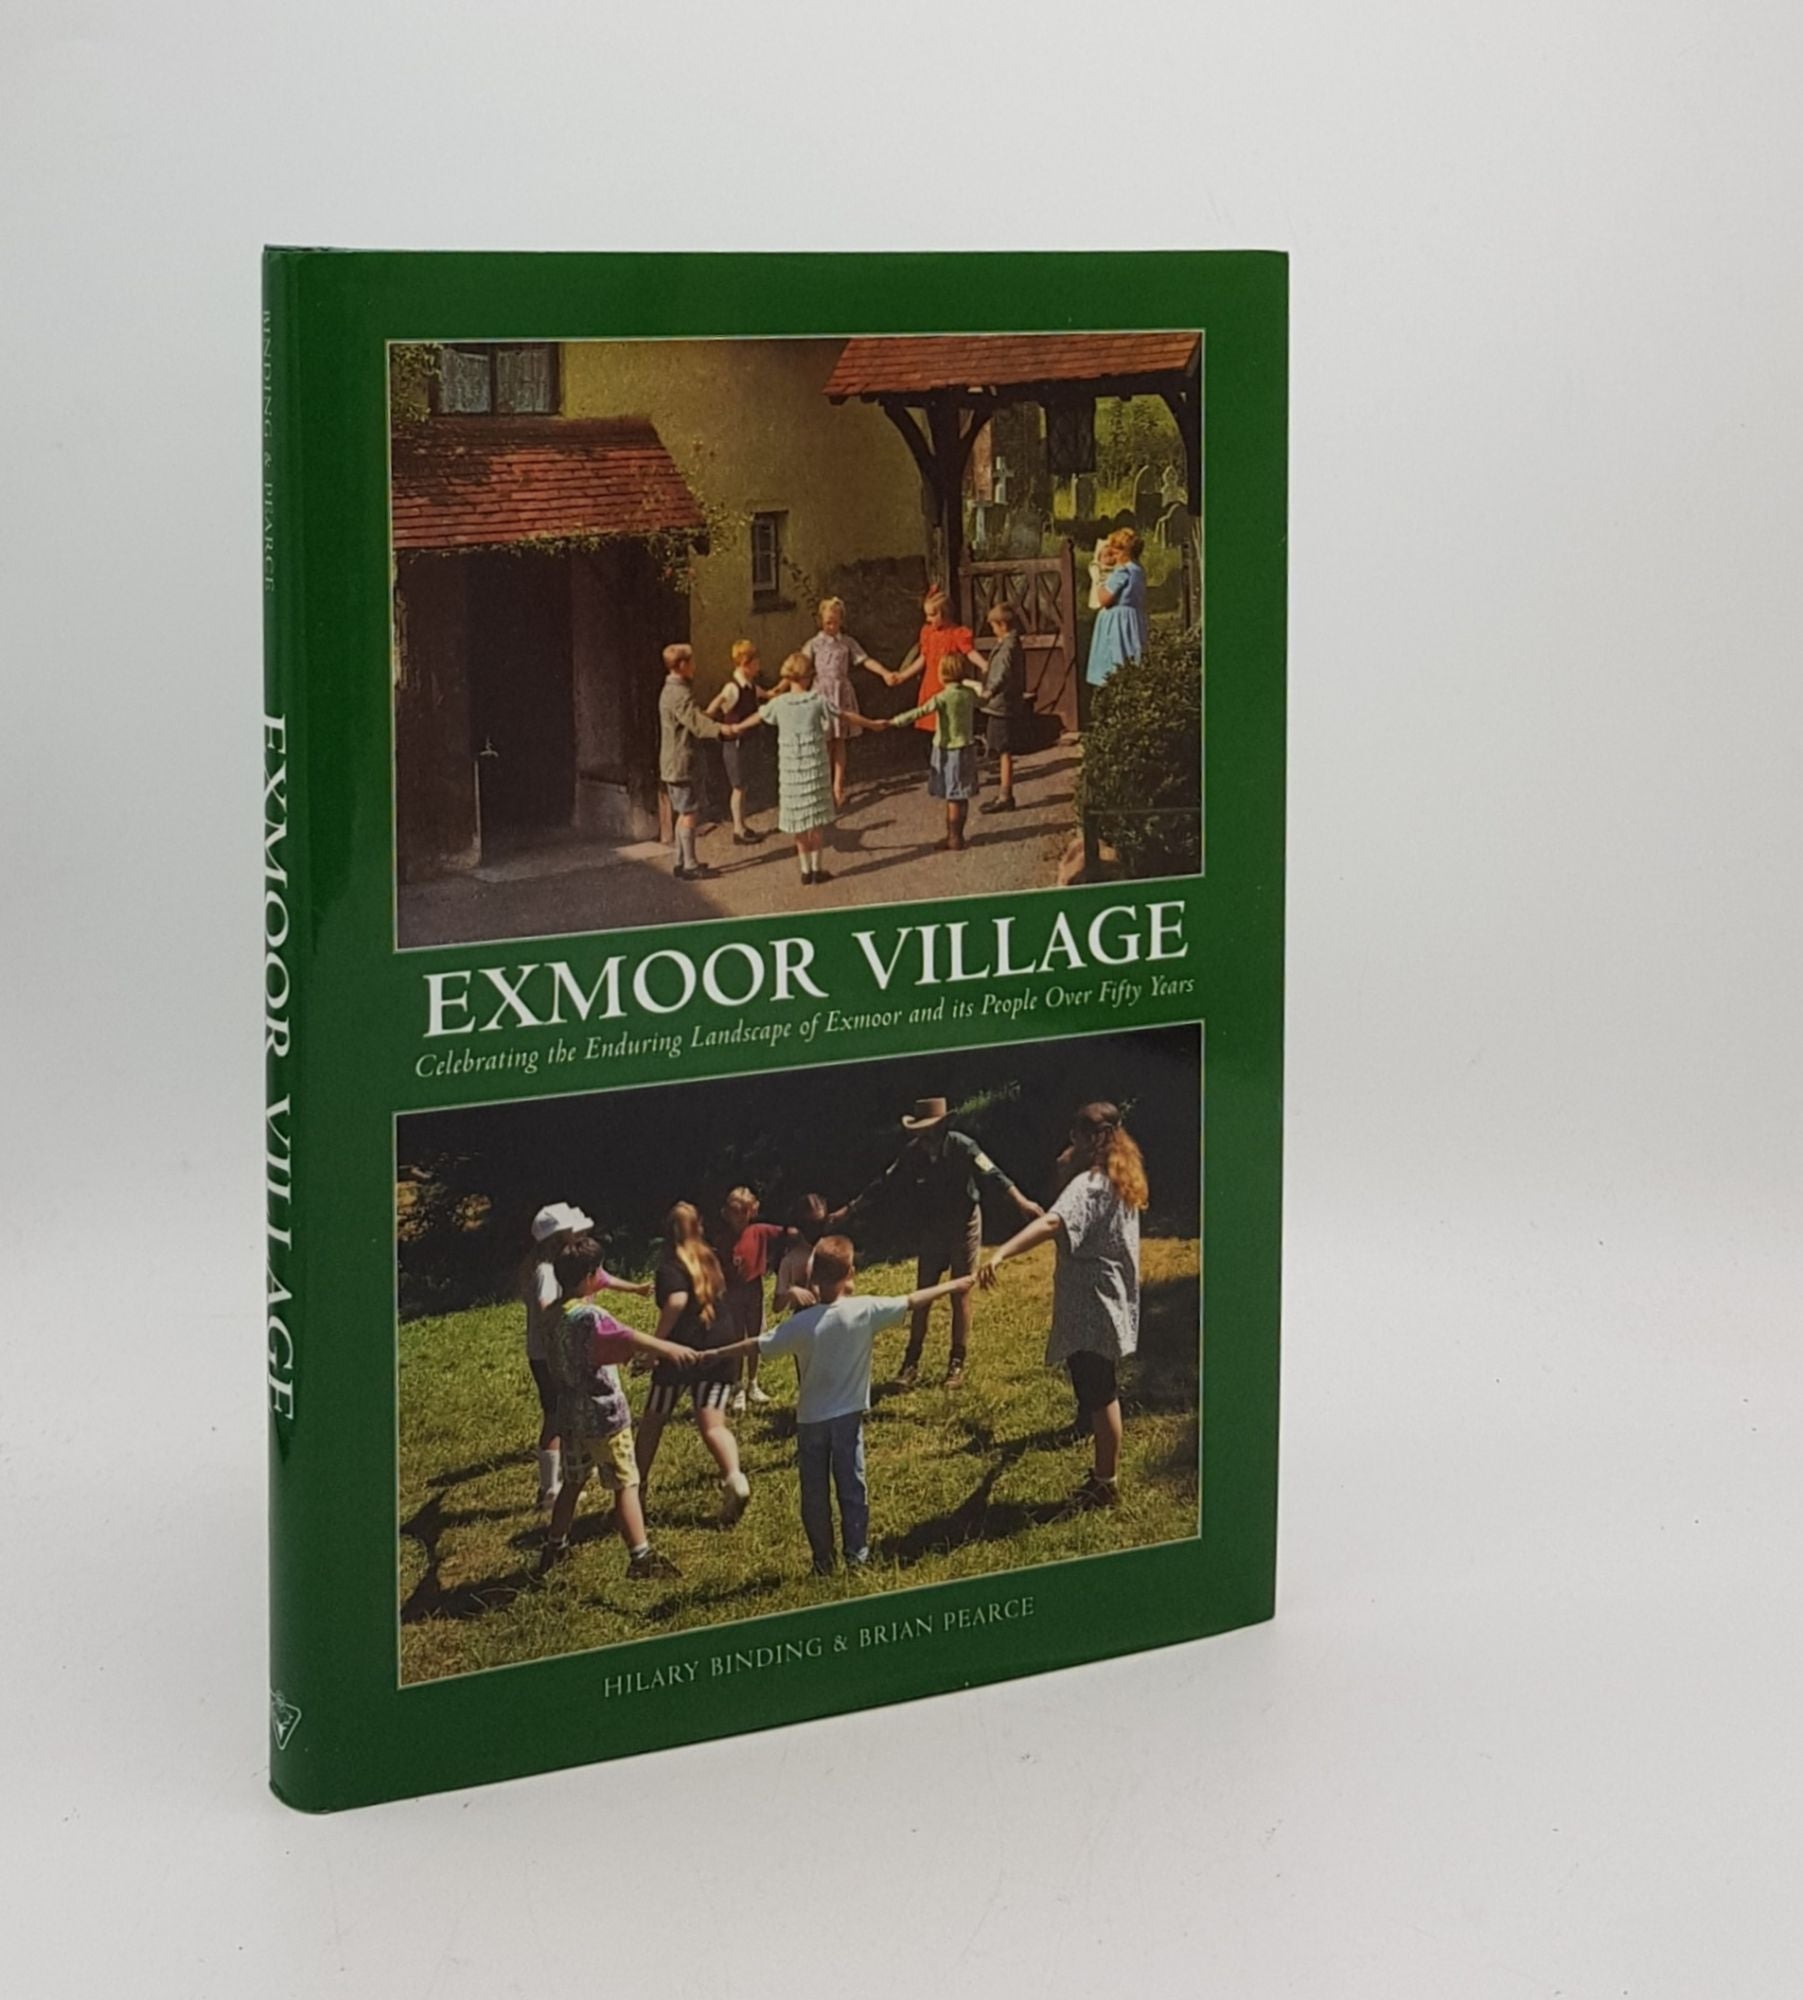 BINDING Hilary, PEARCE Brian - Exmoor Village Looking Back over 50 Years of Exmoor National Park